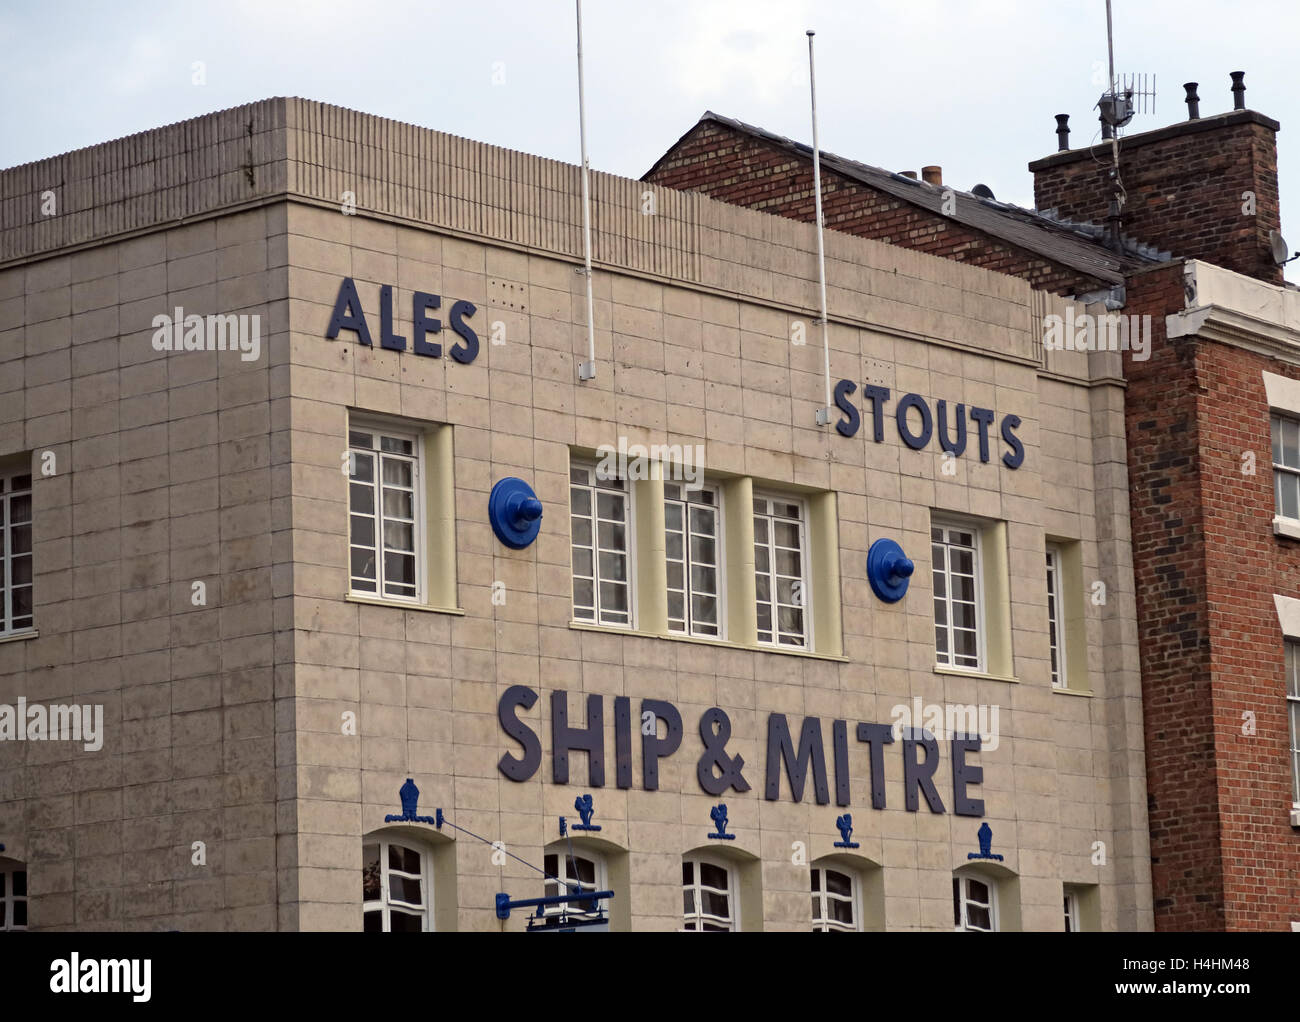 Ship & Mitre pub,Ales,Stouts, Liverpool, UK Stock Photo